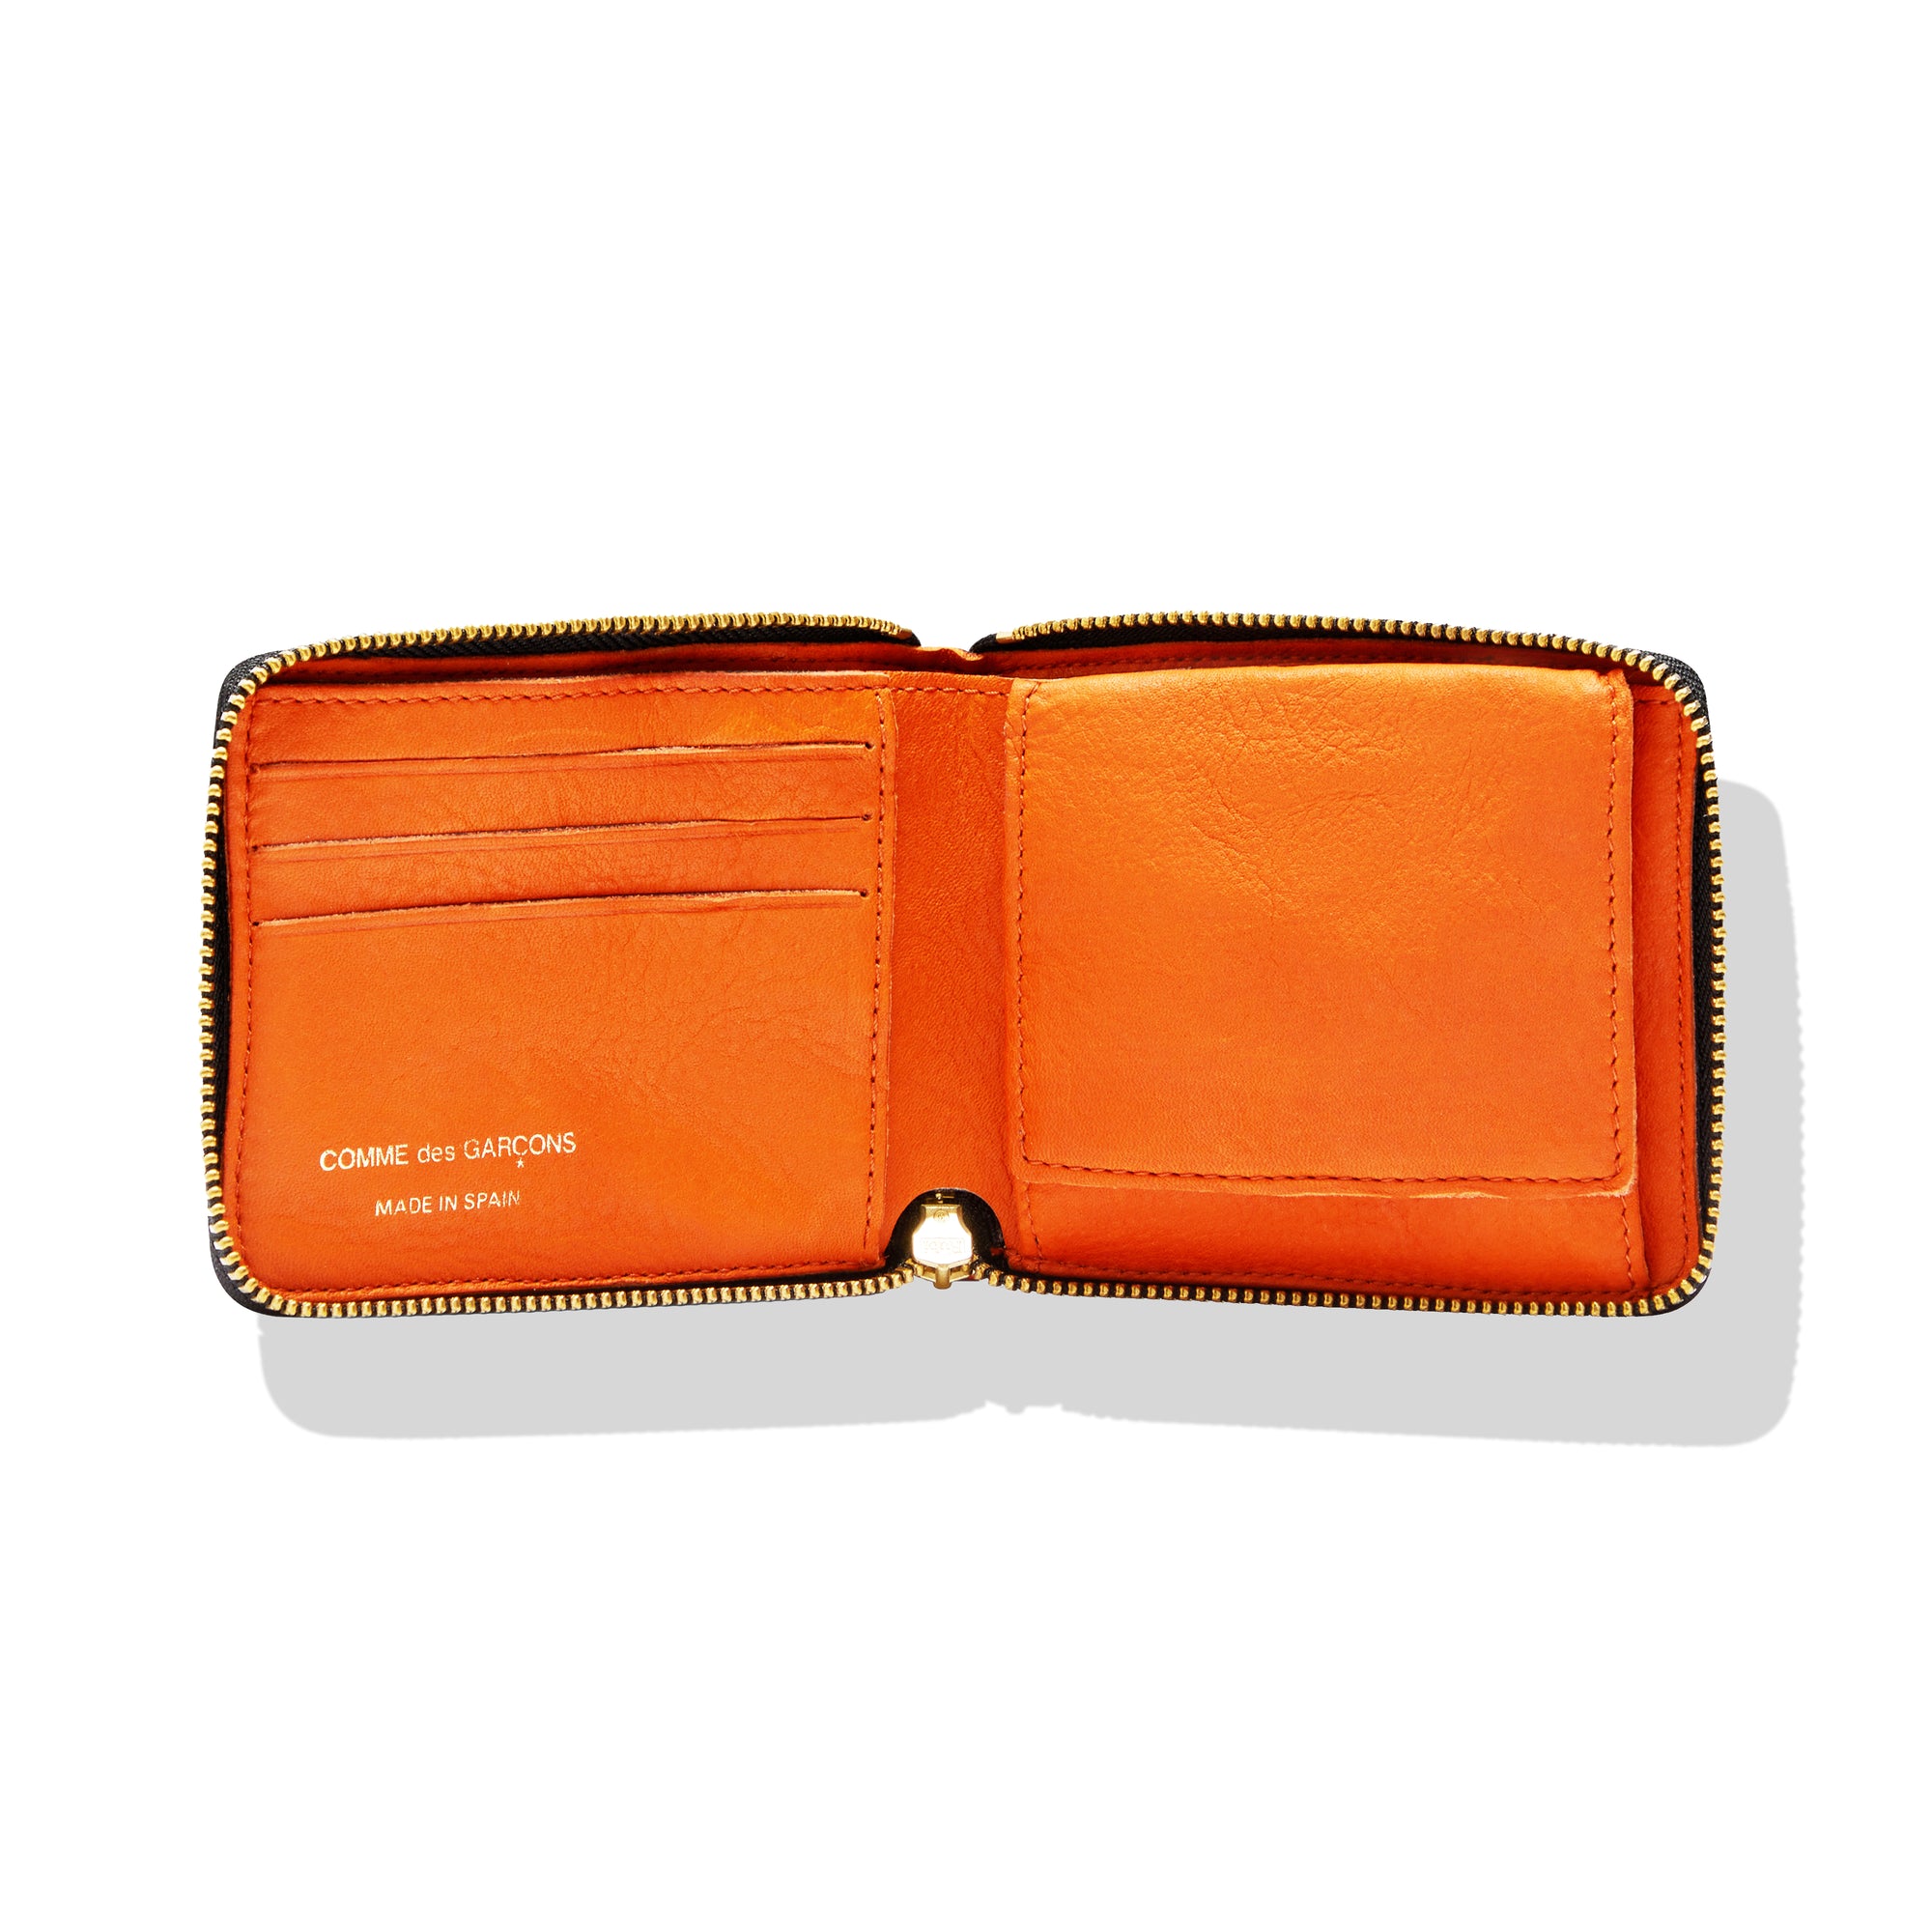 CDG Wallet - Washed Full Zip Around Wallet - (Burnt Orange) 7100 view 2